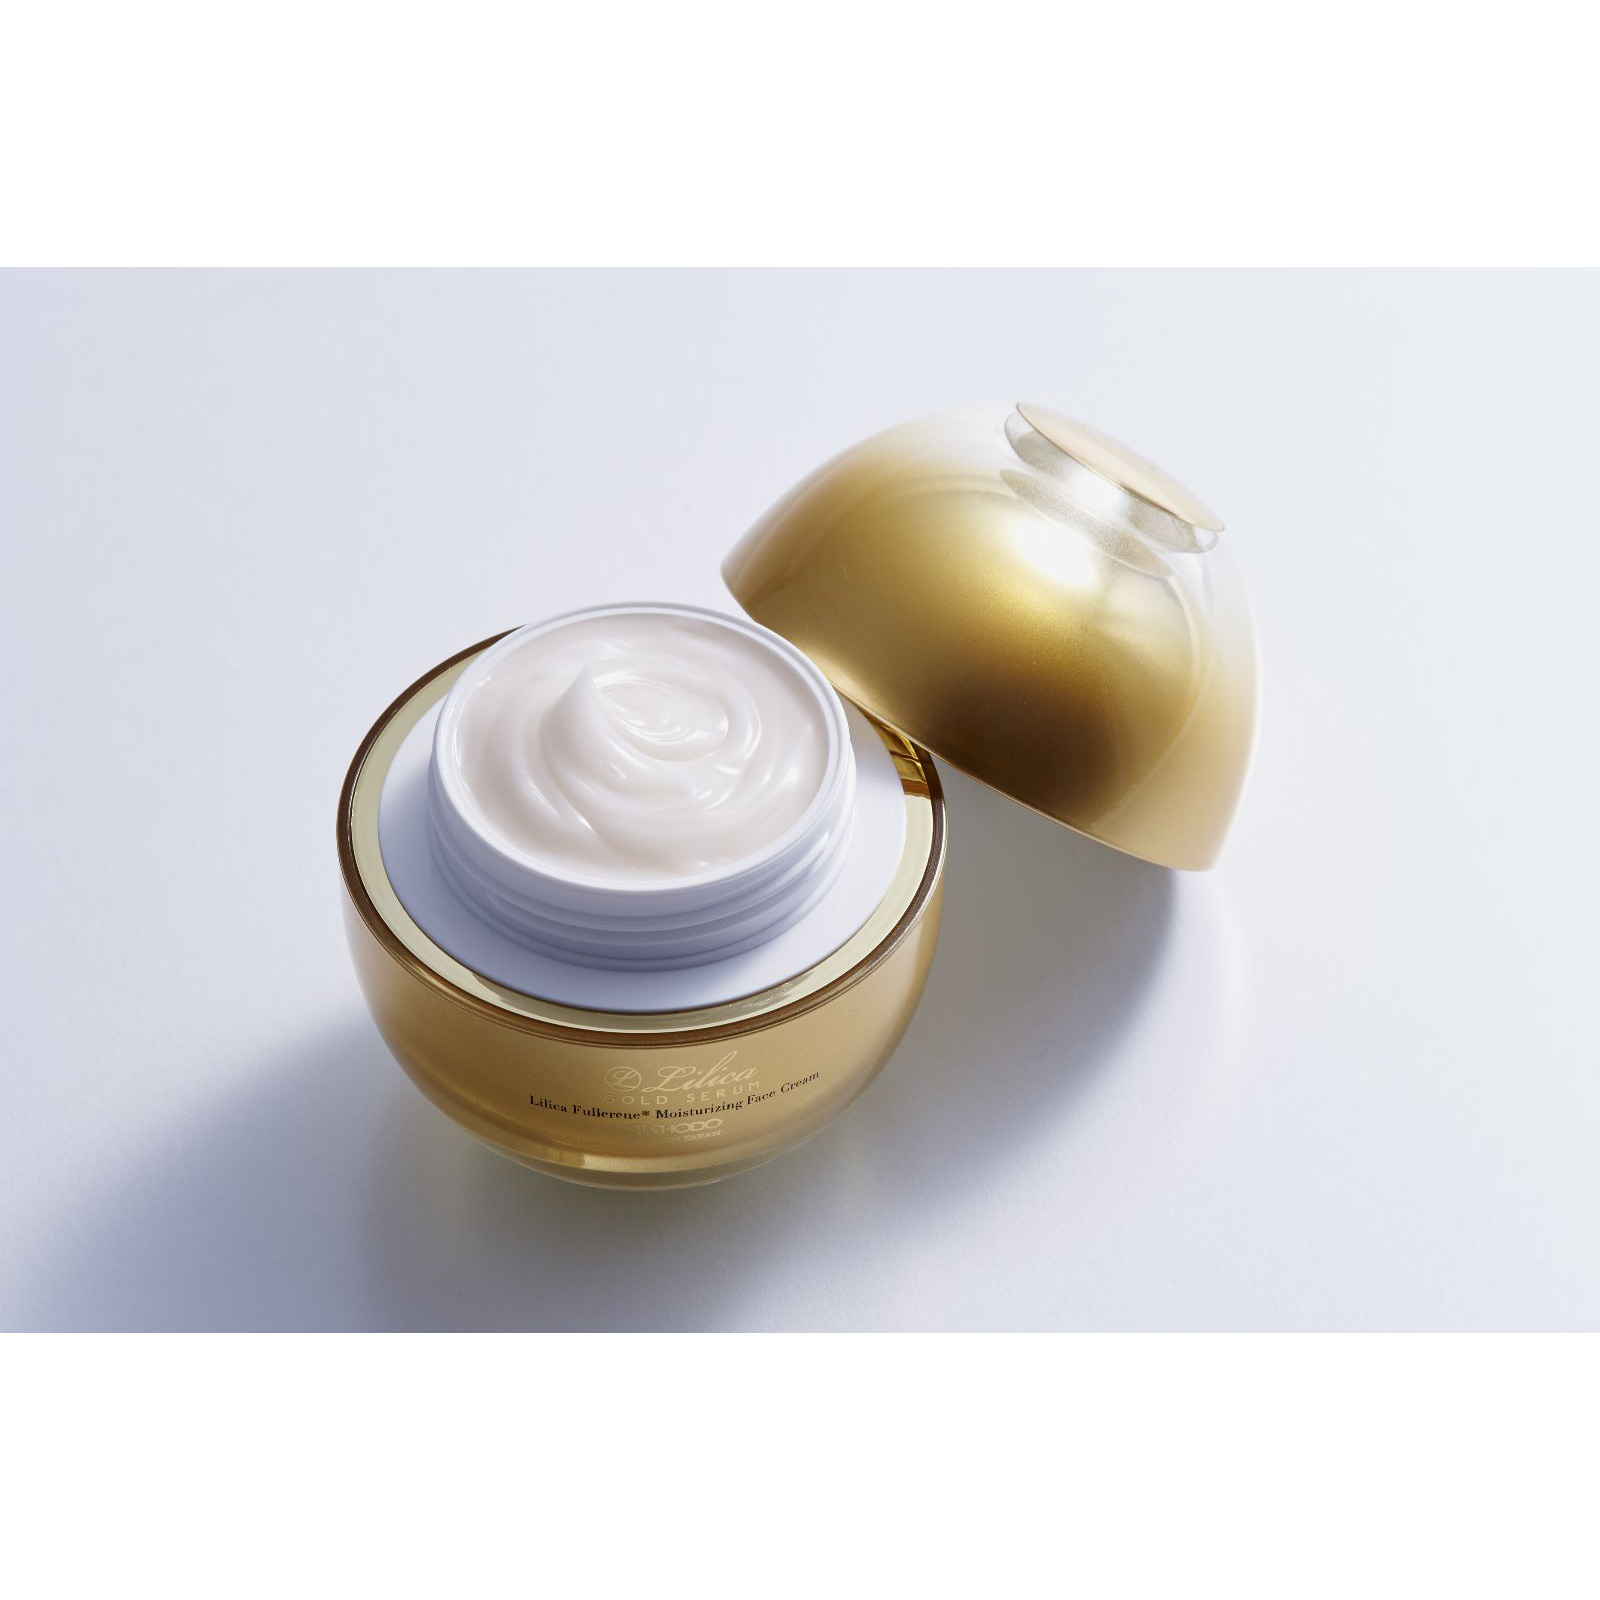 Aishodo LiLiCa Gold Serum Fullerene Moisturizing Face Cream. Увлажняющий крем для лица на основе фуллерена «Золотая сыворотка ЛиЛиКа» Айшодо, 45 г